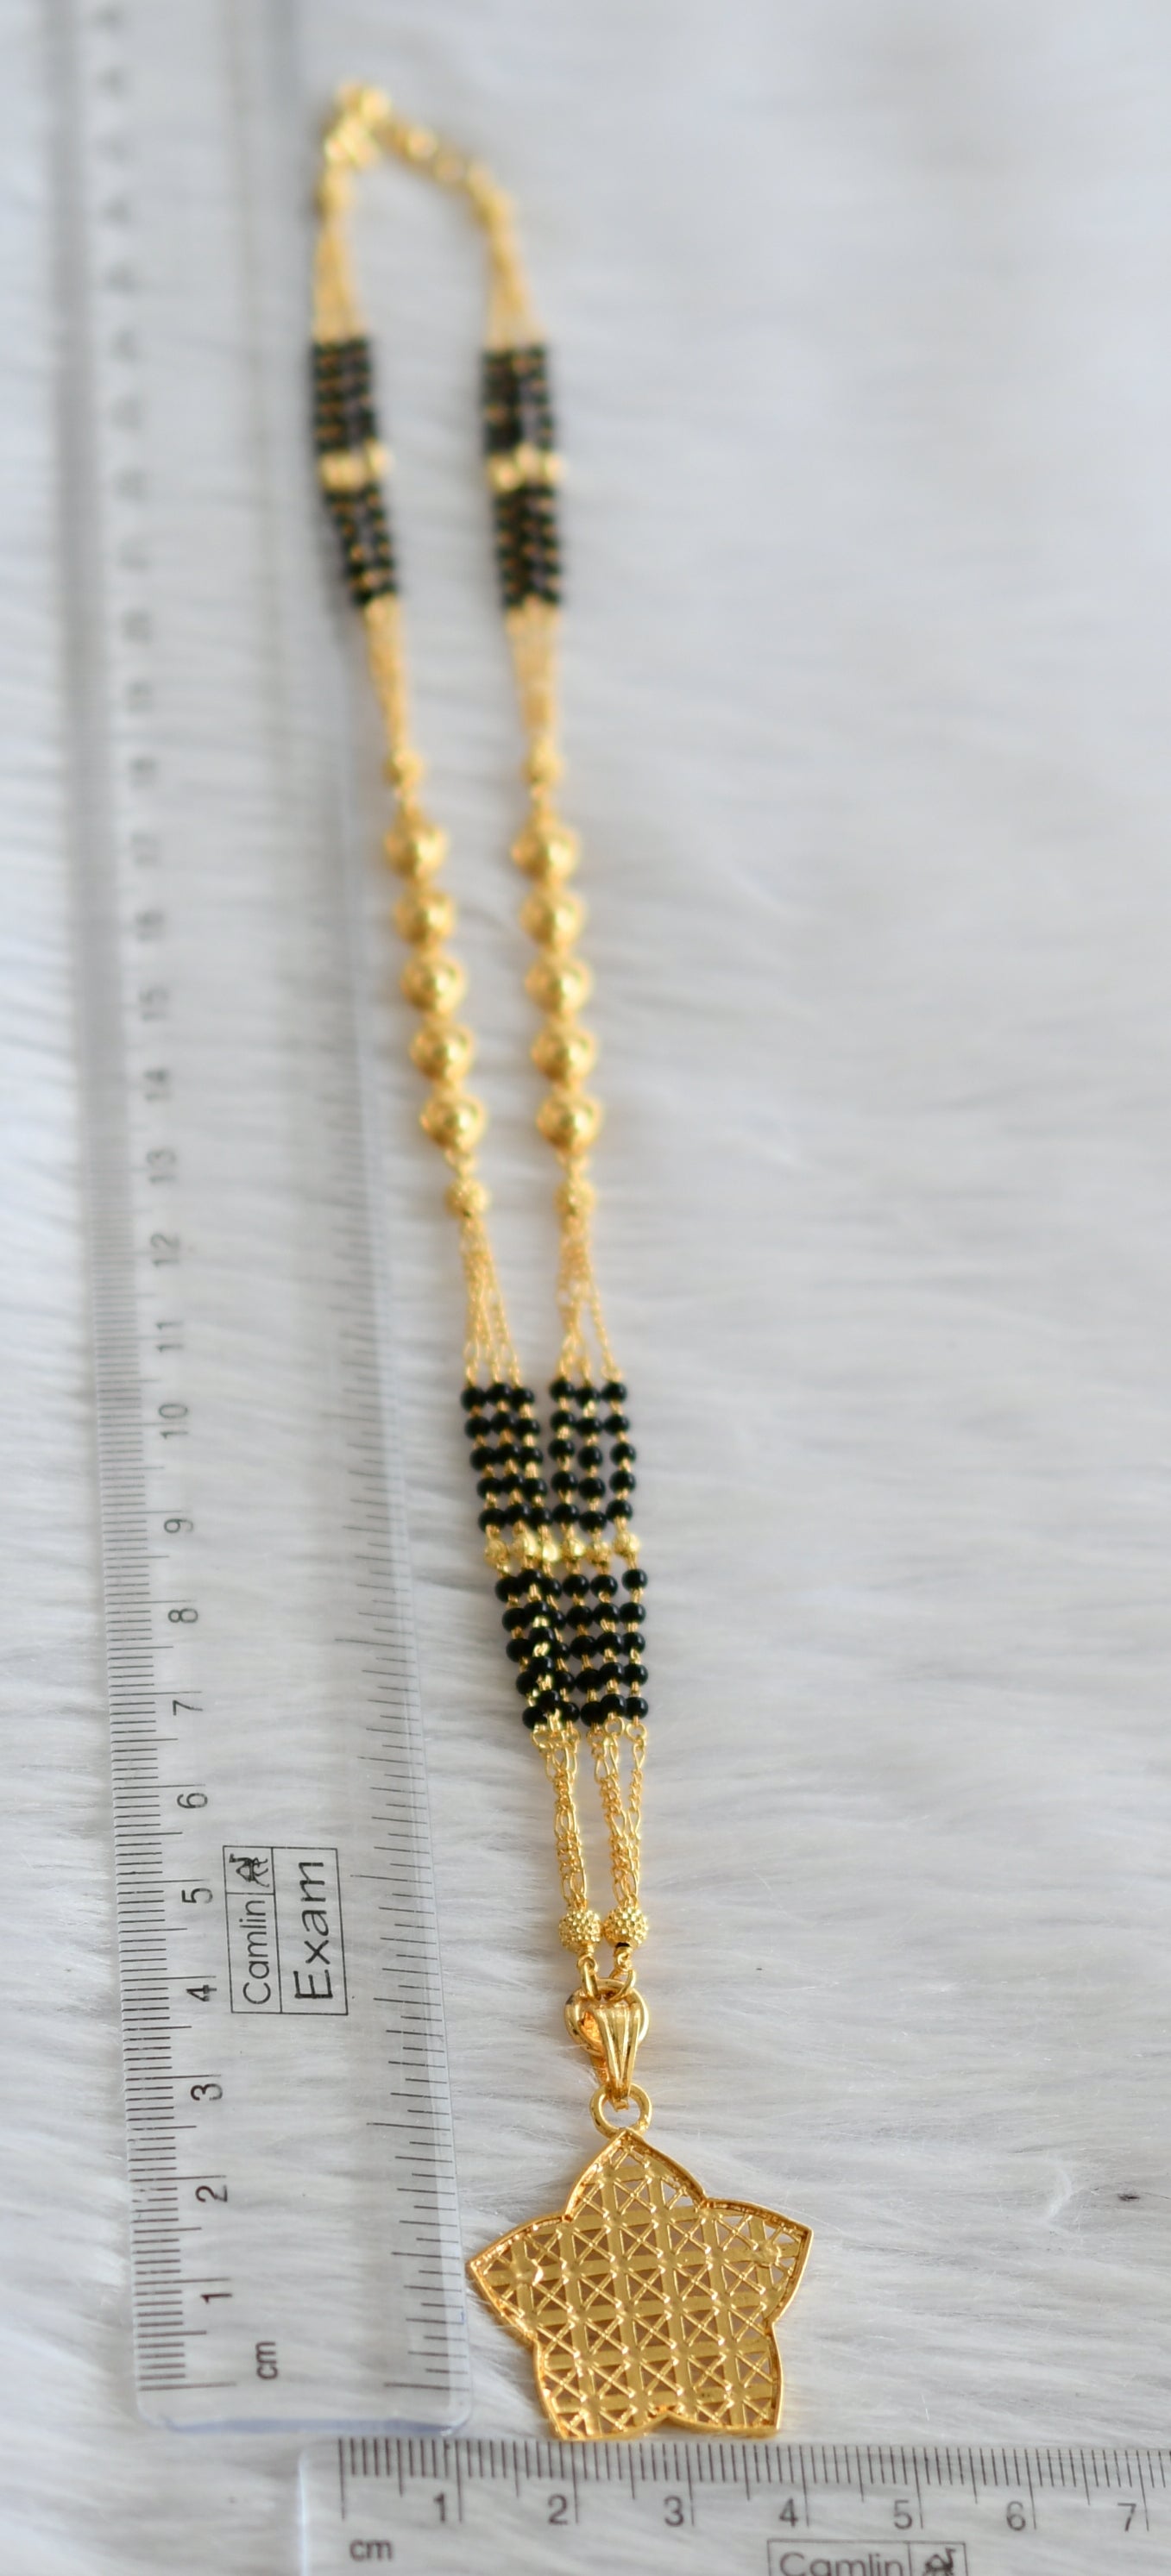 Gold tone 18 inches karimani chain with nakshatra pendant dj-44803